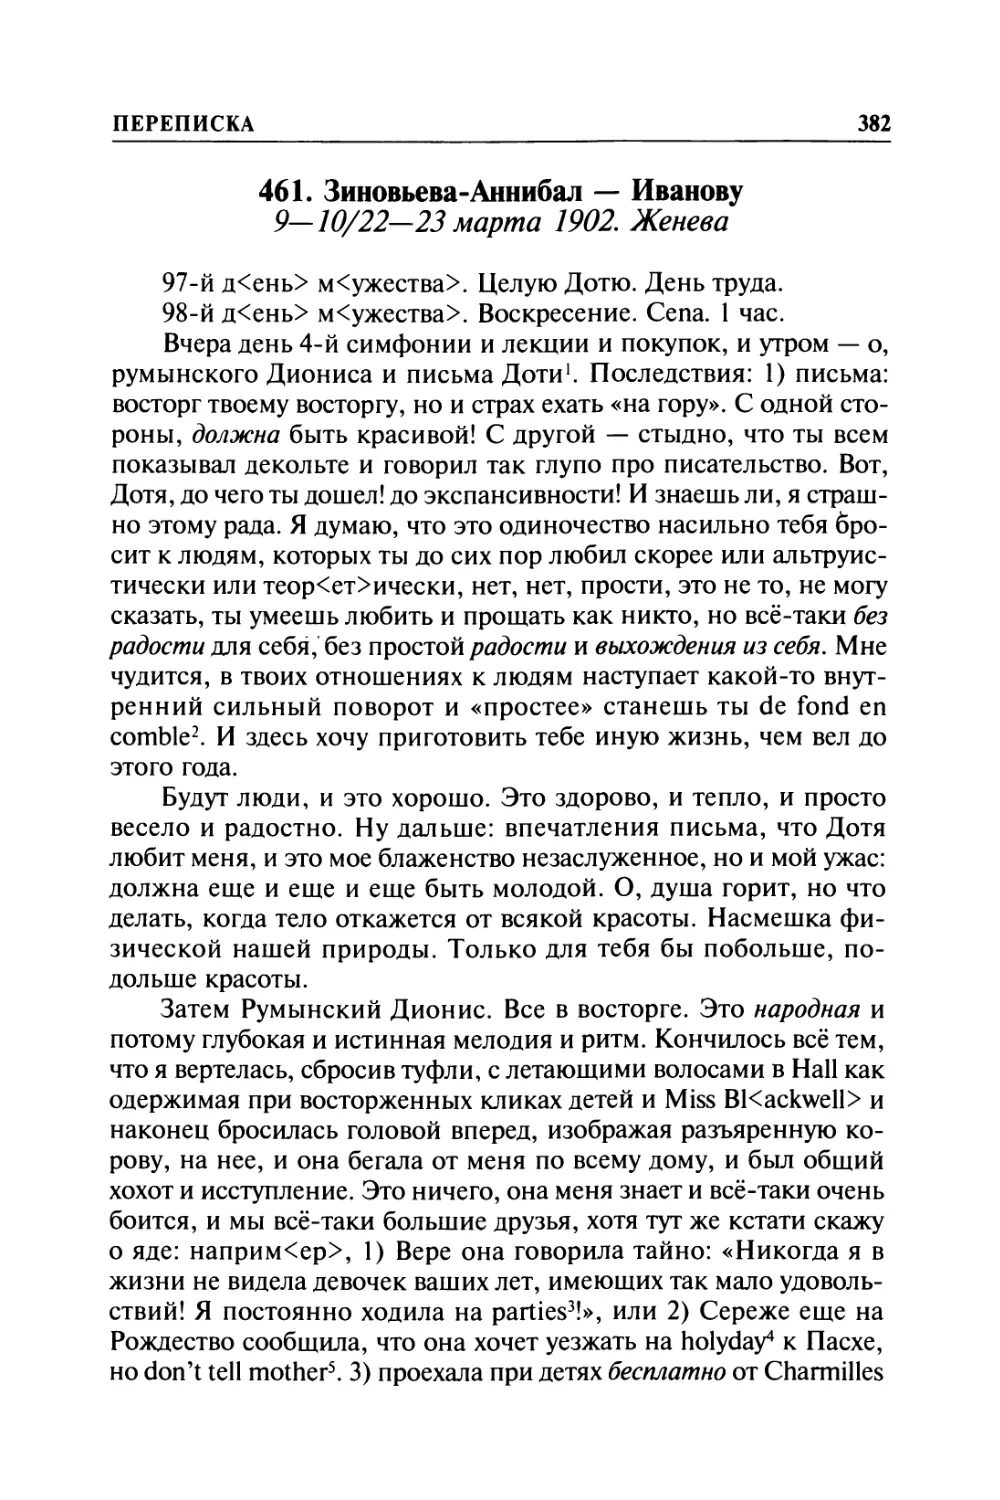 461. Зиновьева-Аннибал — Иванову. 9—10/ 22—23 марта 1902. Женева